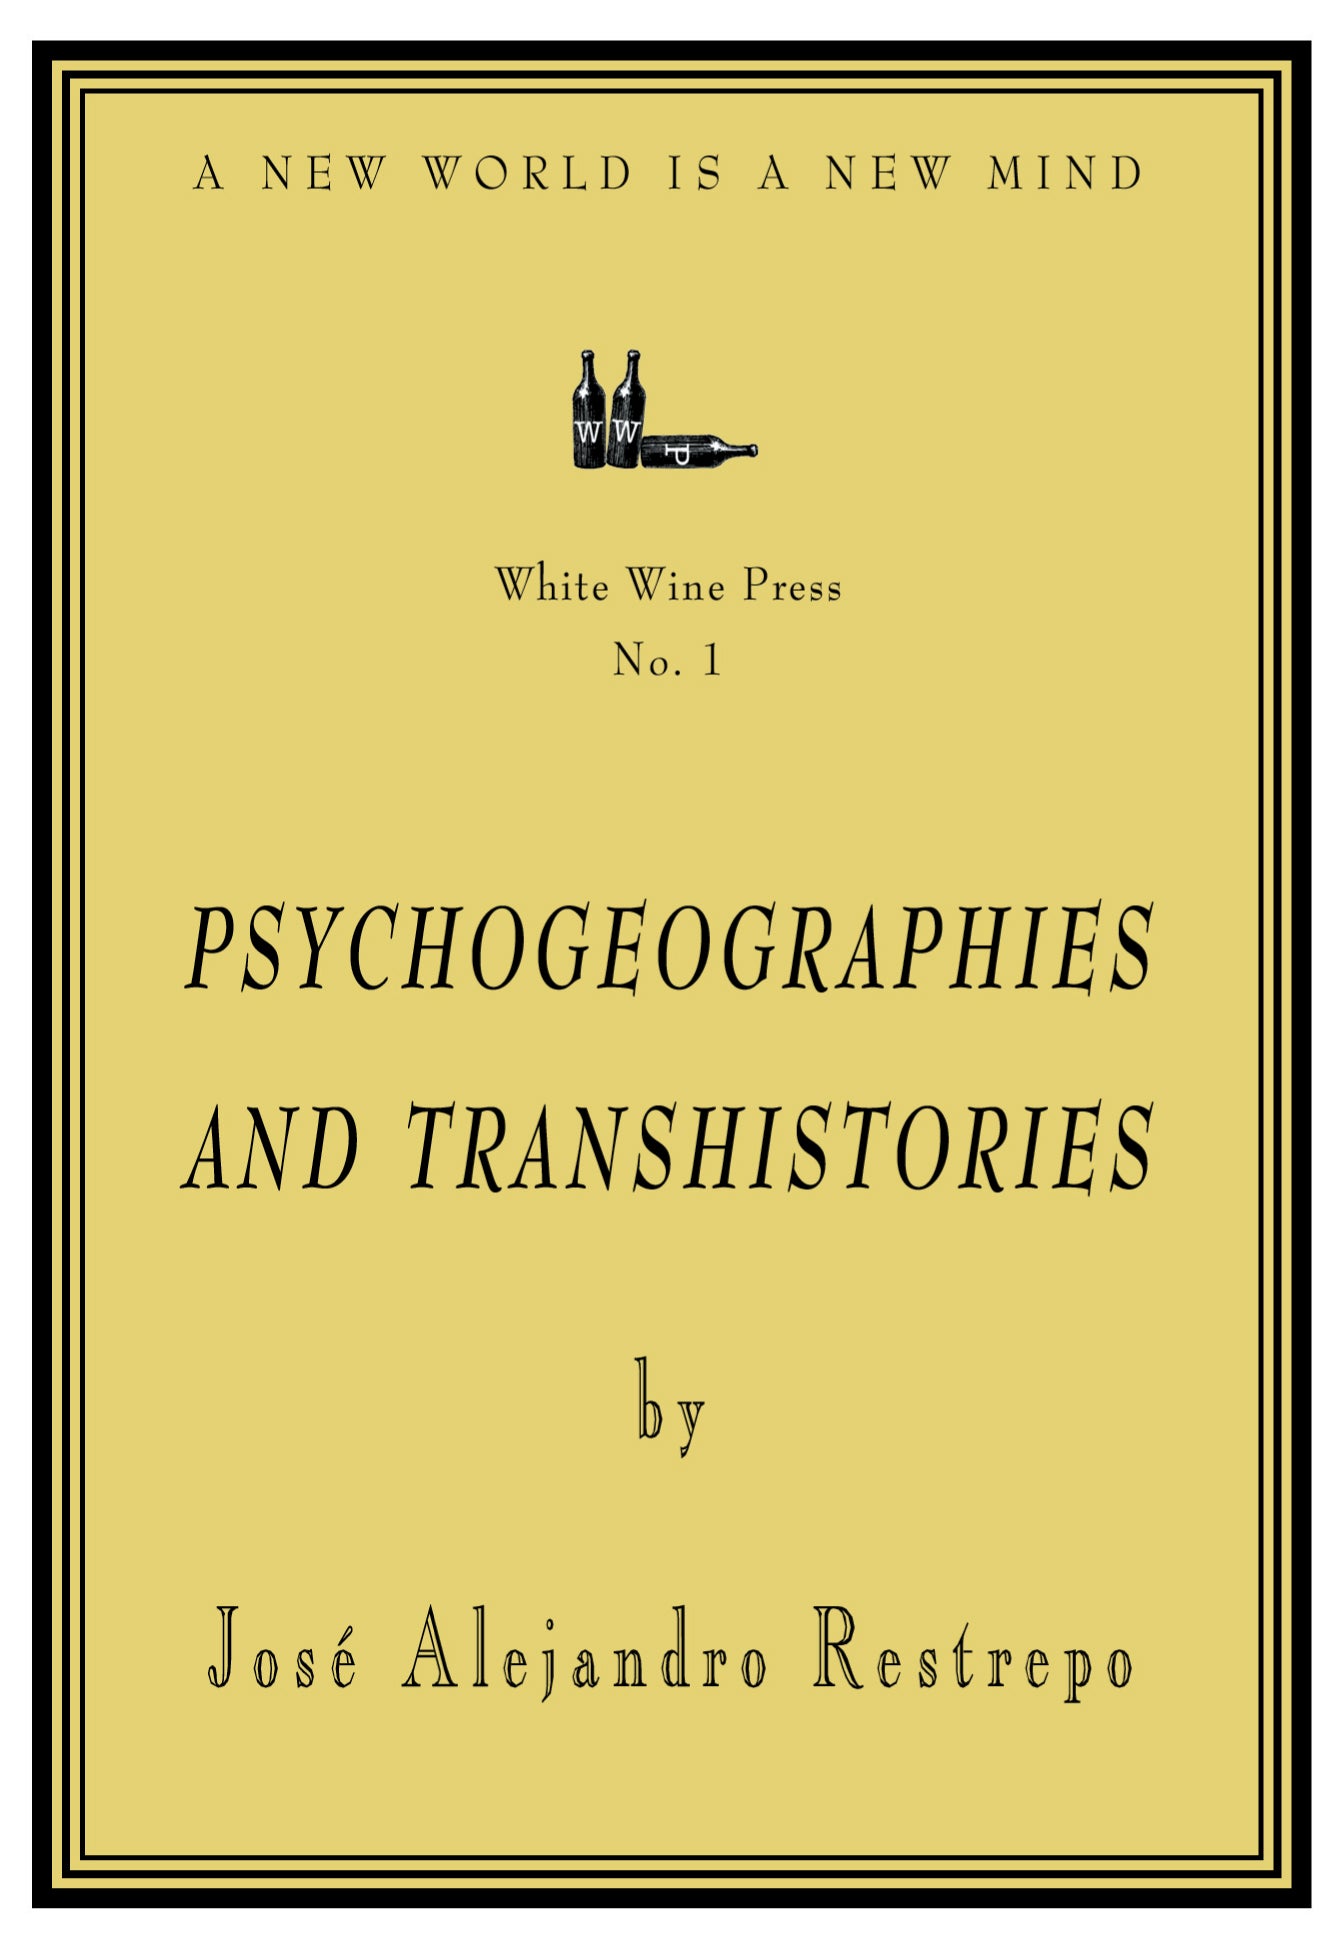 Psychogeographies and Transhistories by Jose Alejandro Restrepo [White Wine Press No. 1]